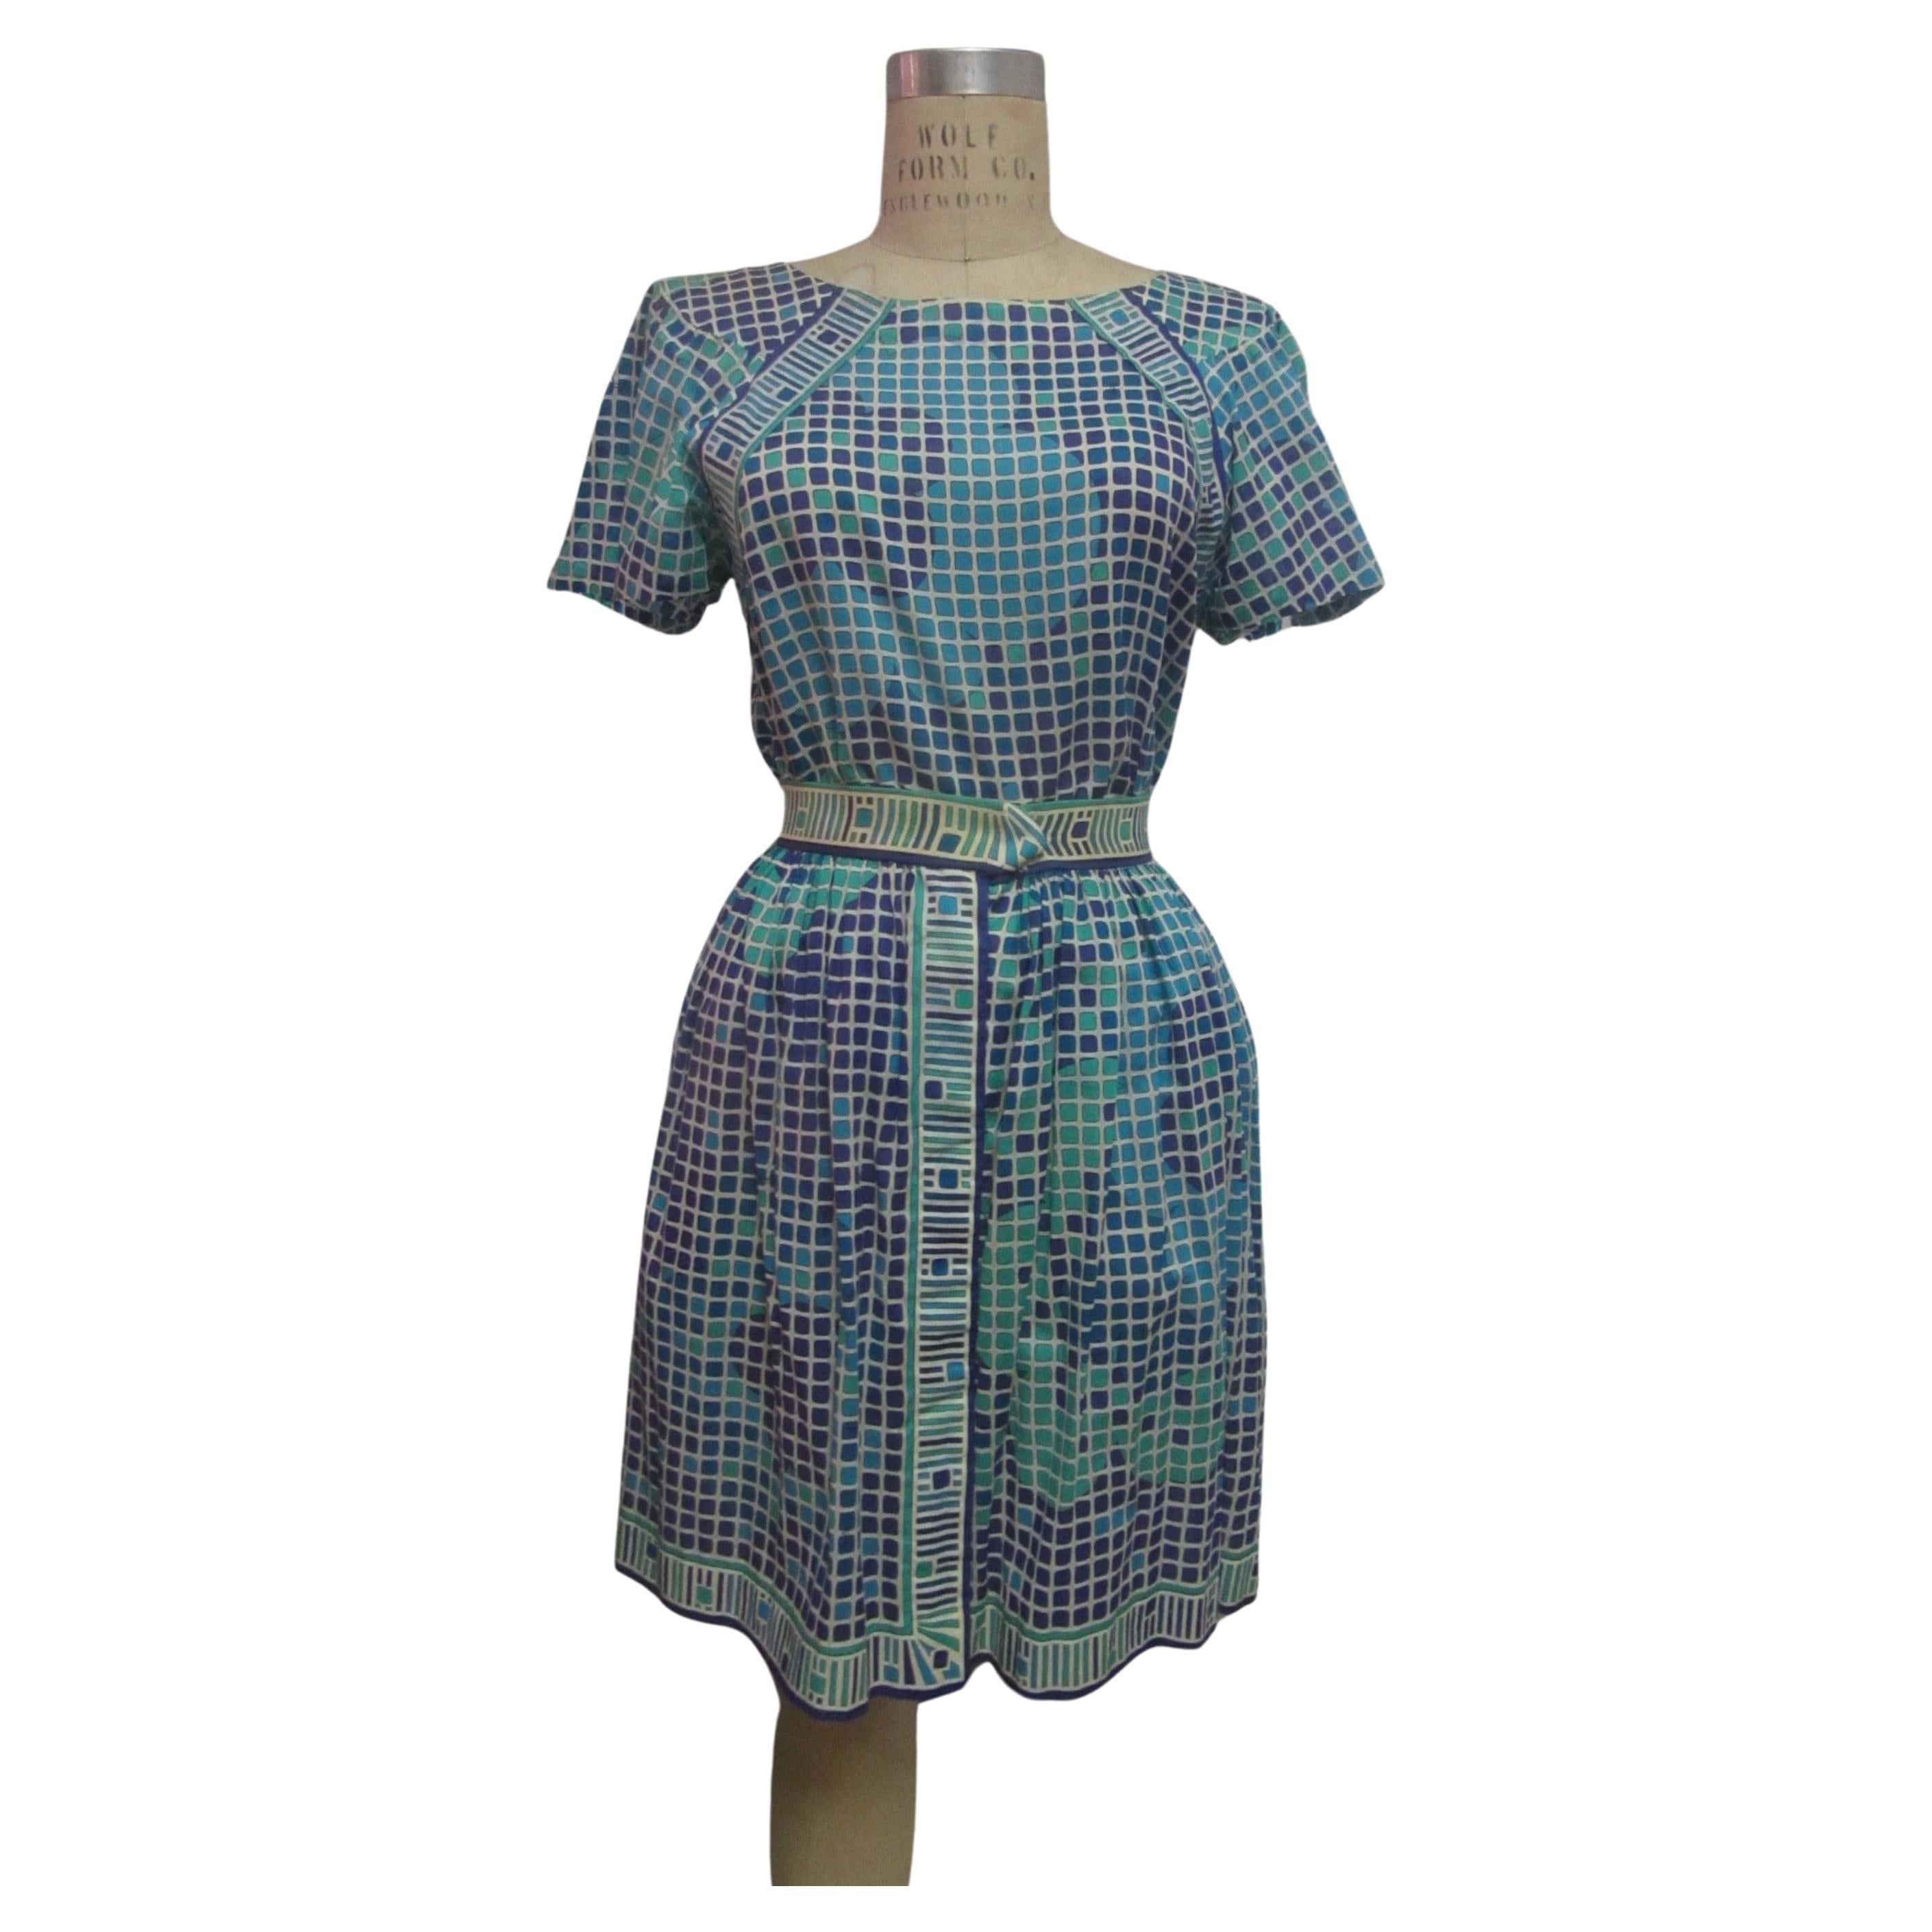 Emilio Pucci Cotton Geometric Print Top and Skirt Set, Circa 1960s